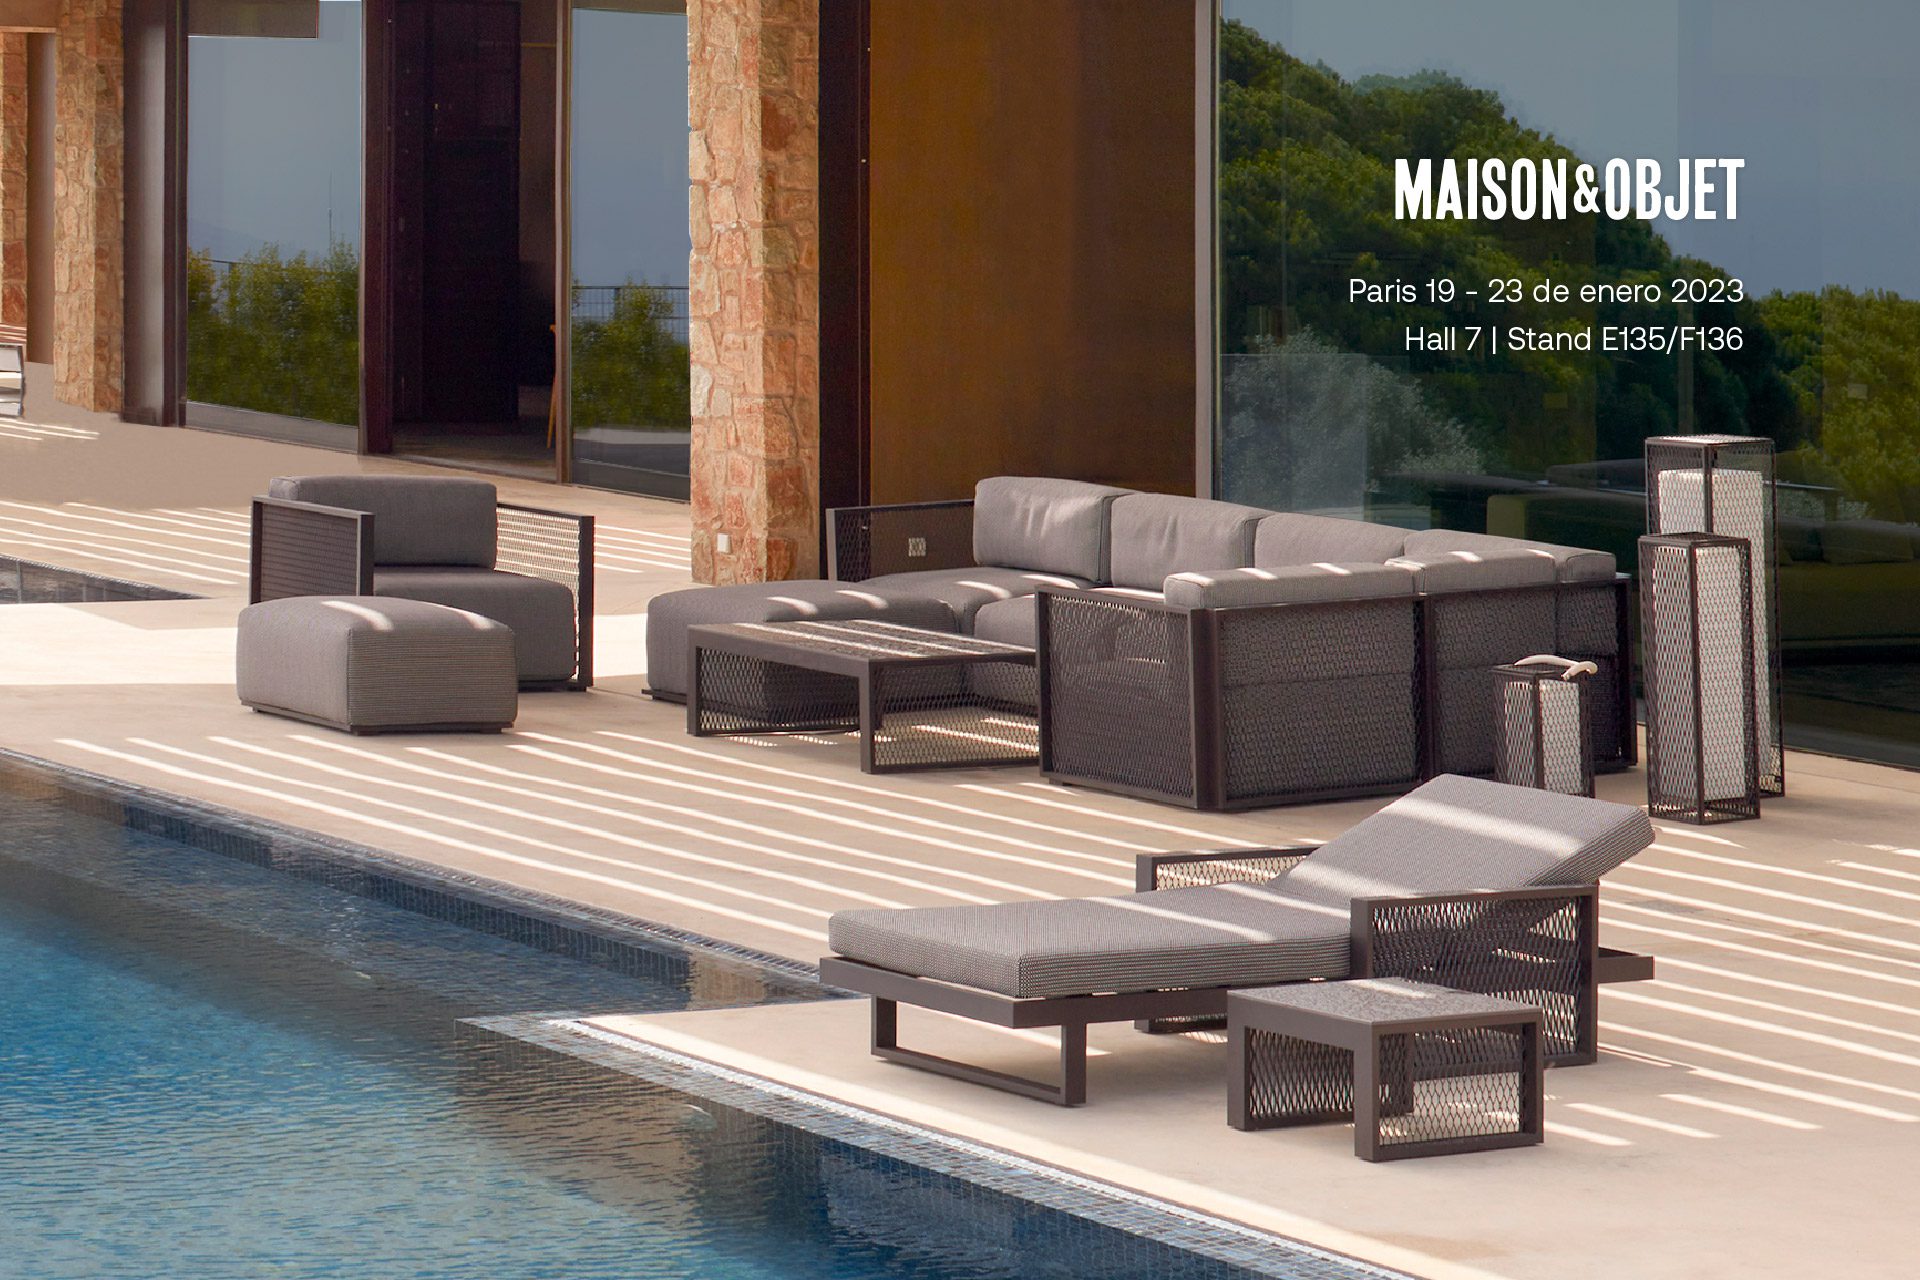 Vondom expondrá en la feria de diseño Maison&Objet 2023